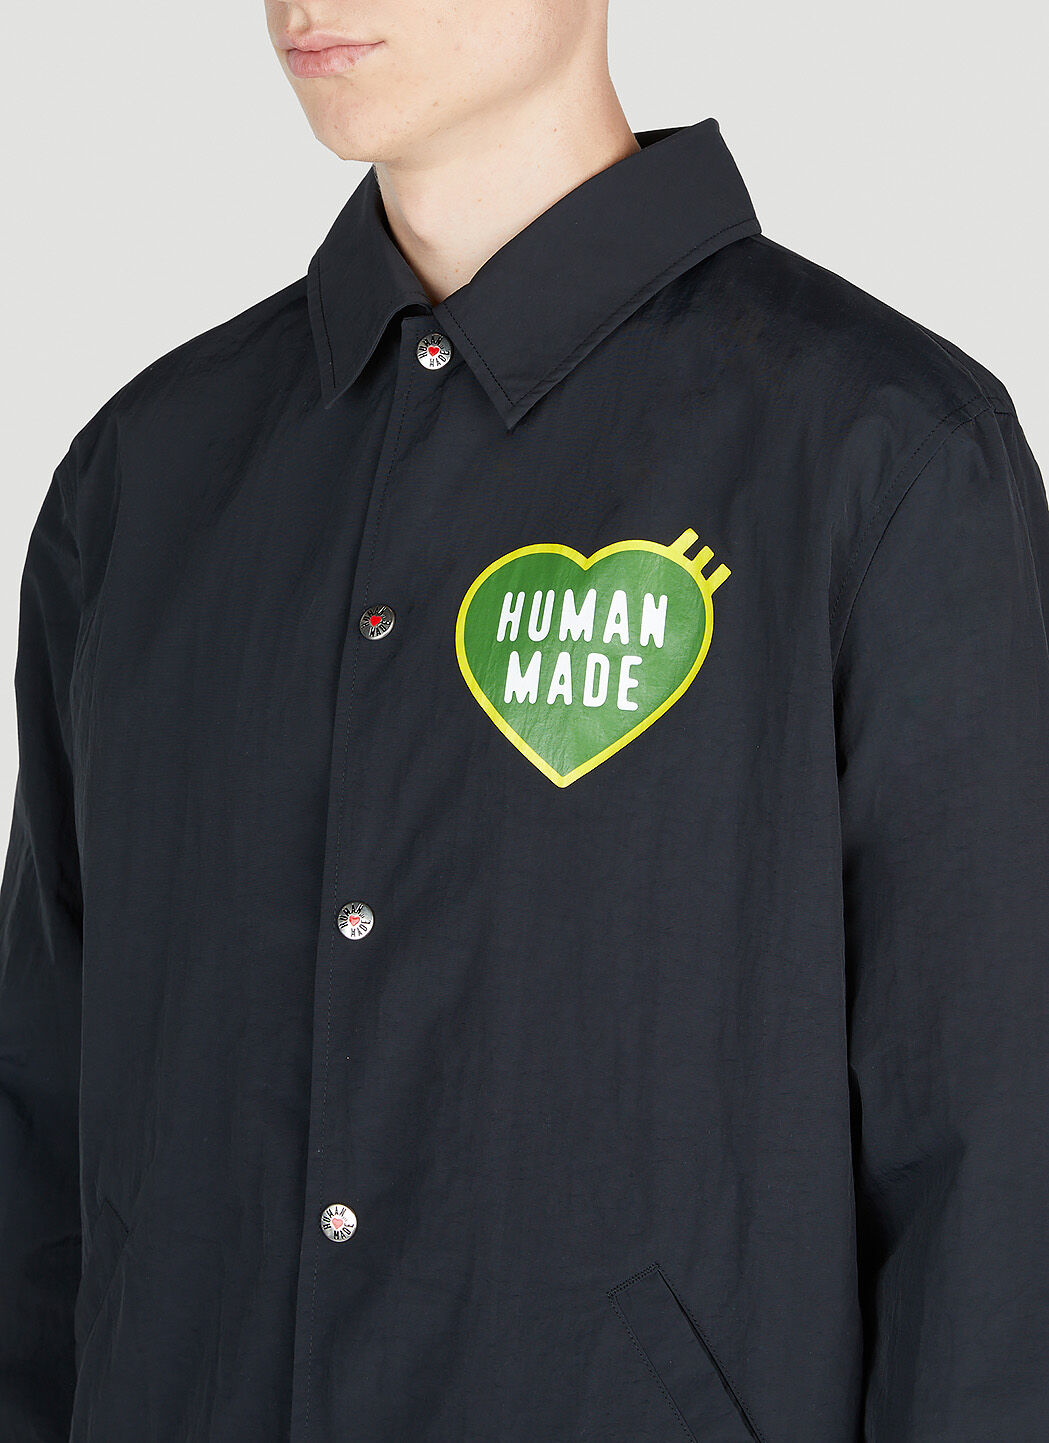 Human Made Coach Jacket in Black | LN-CC®